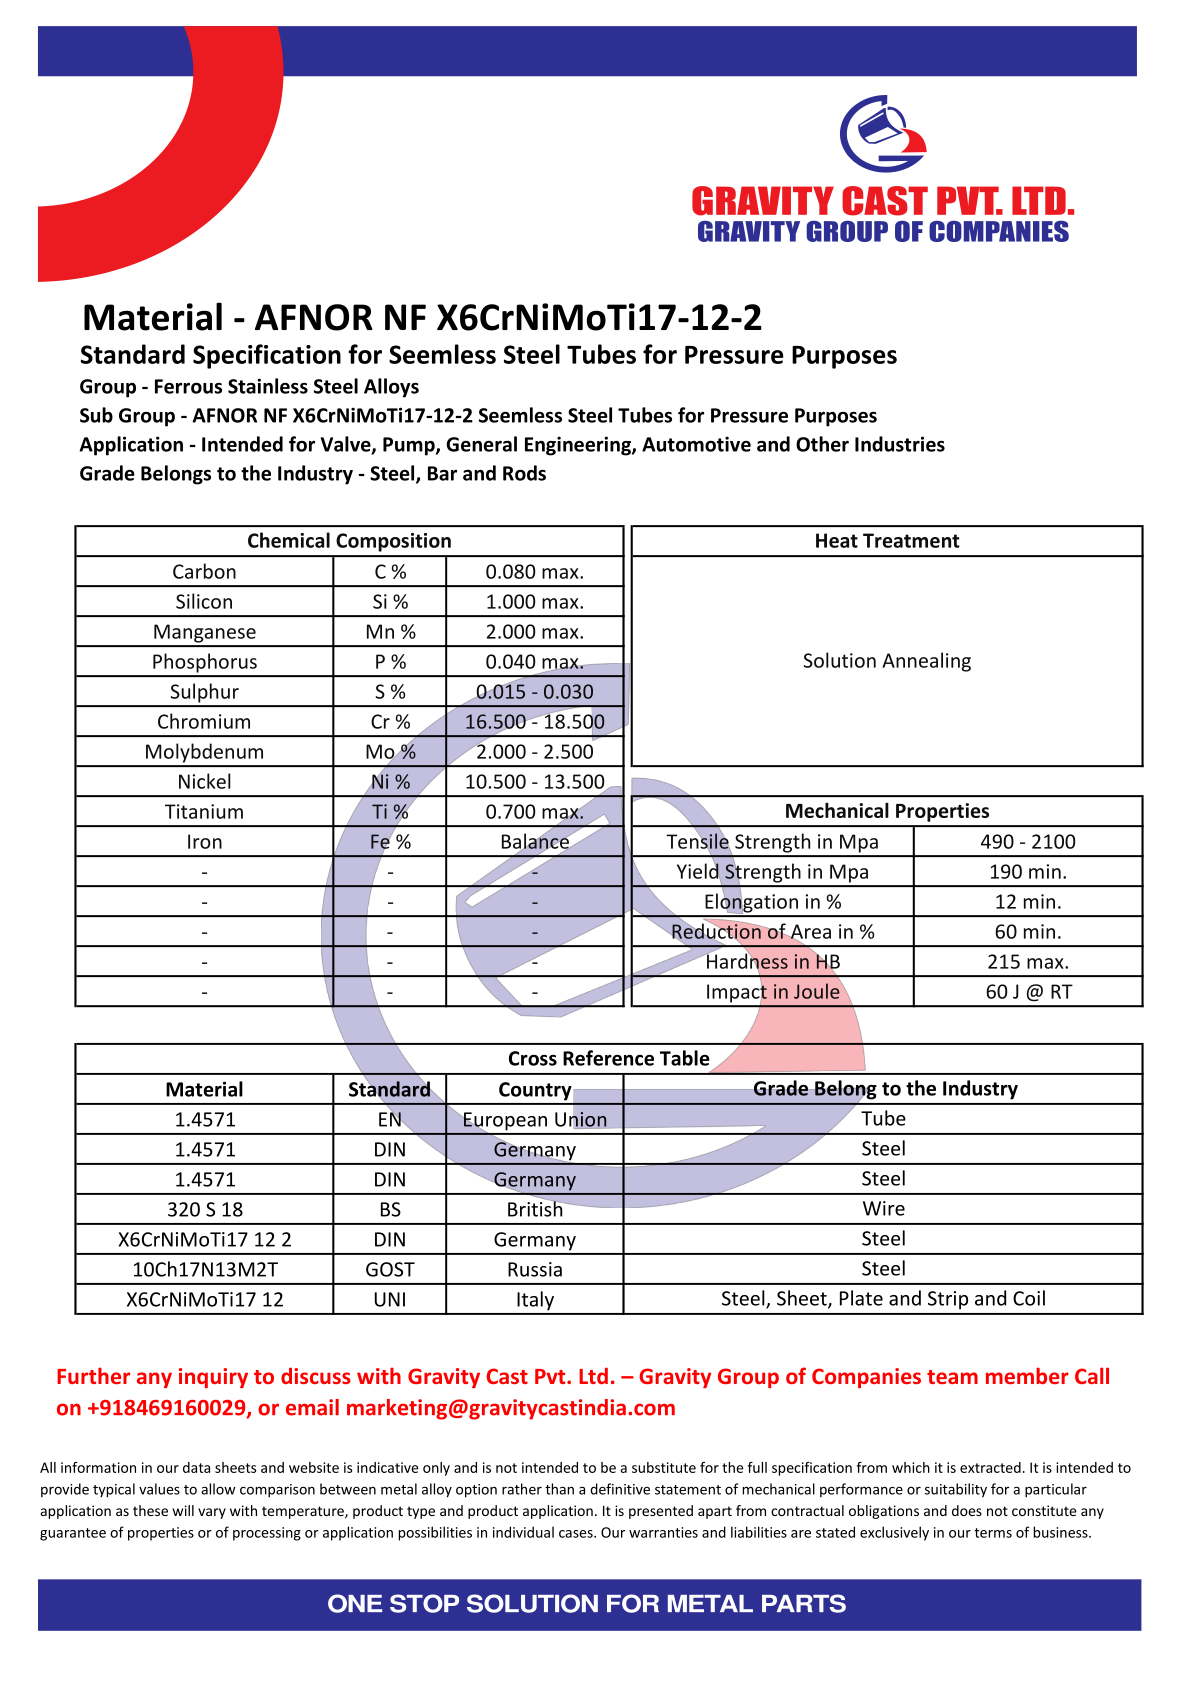 AFNOR NF X6CrNiMoTi17-12-2.pdf